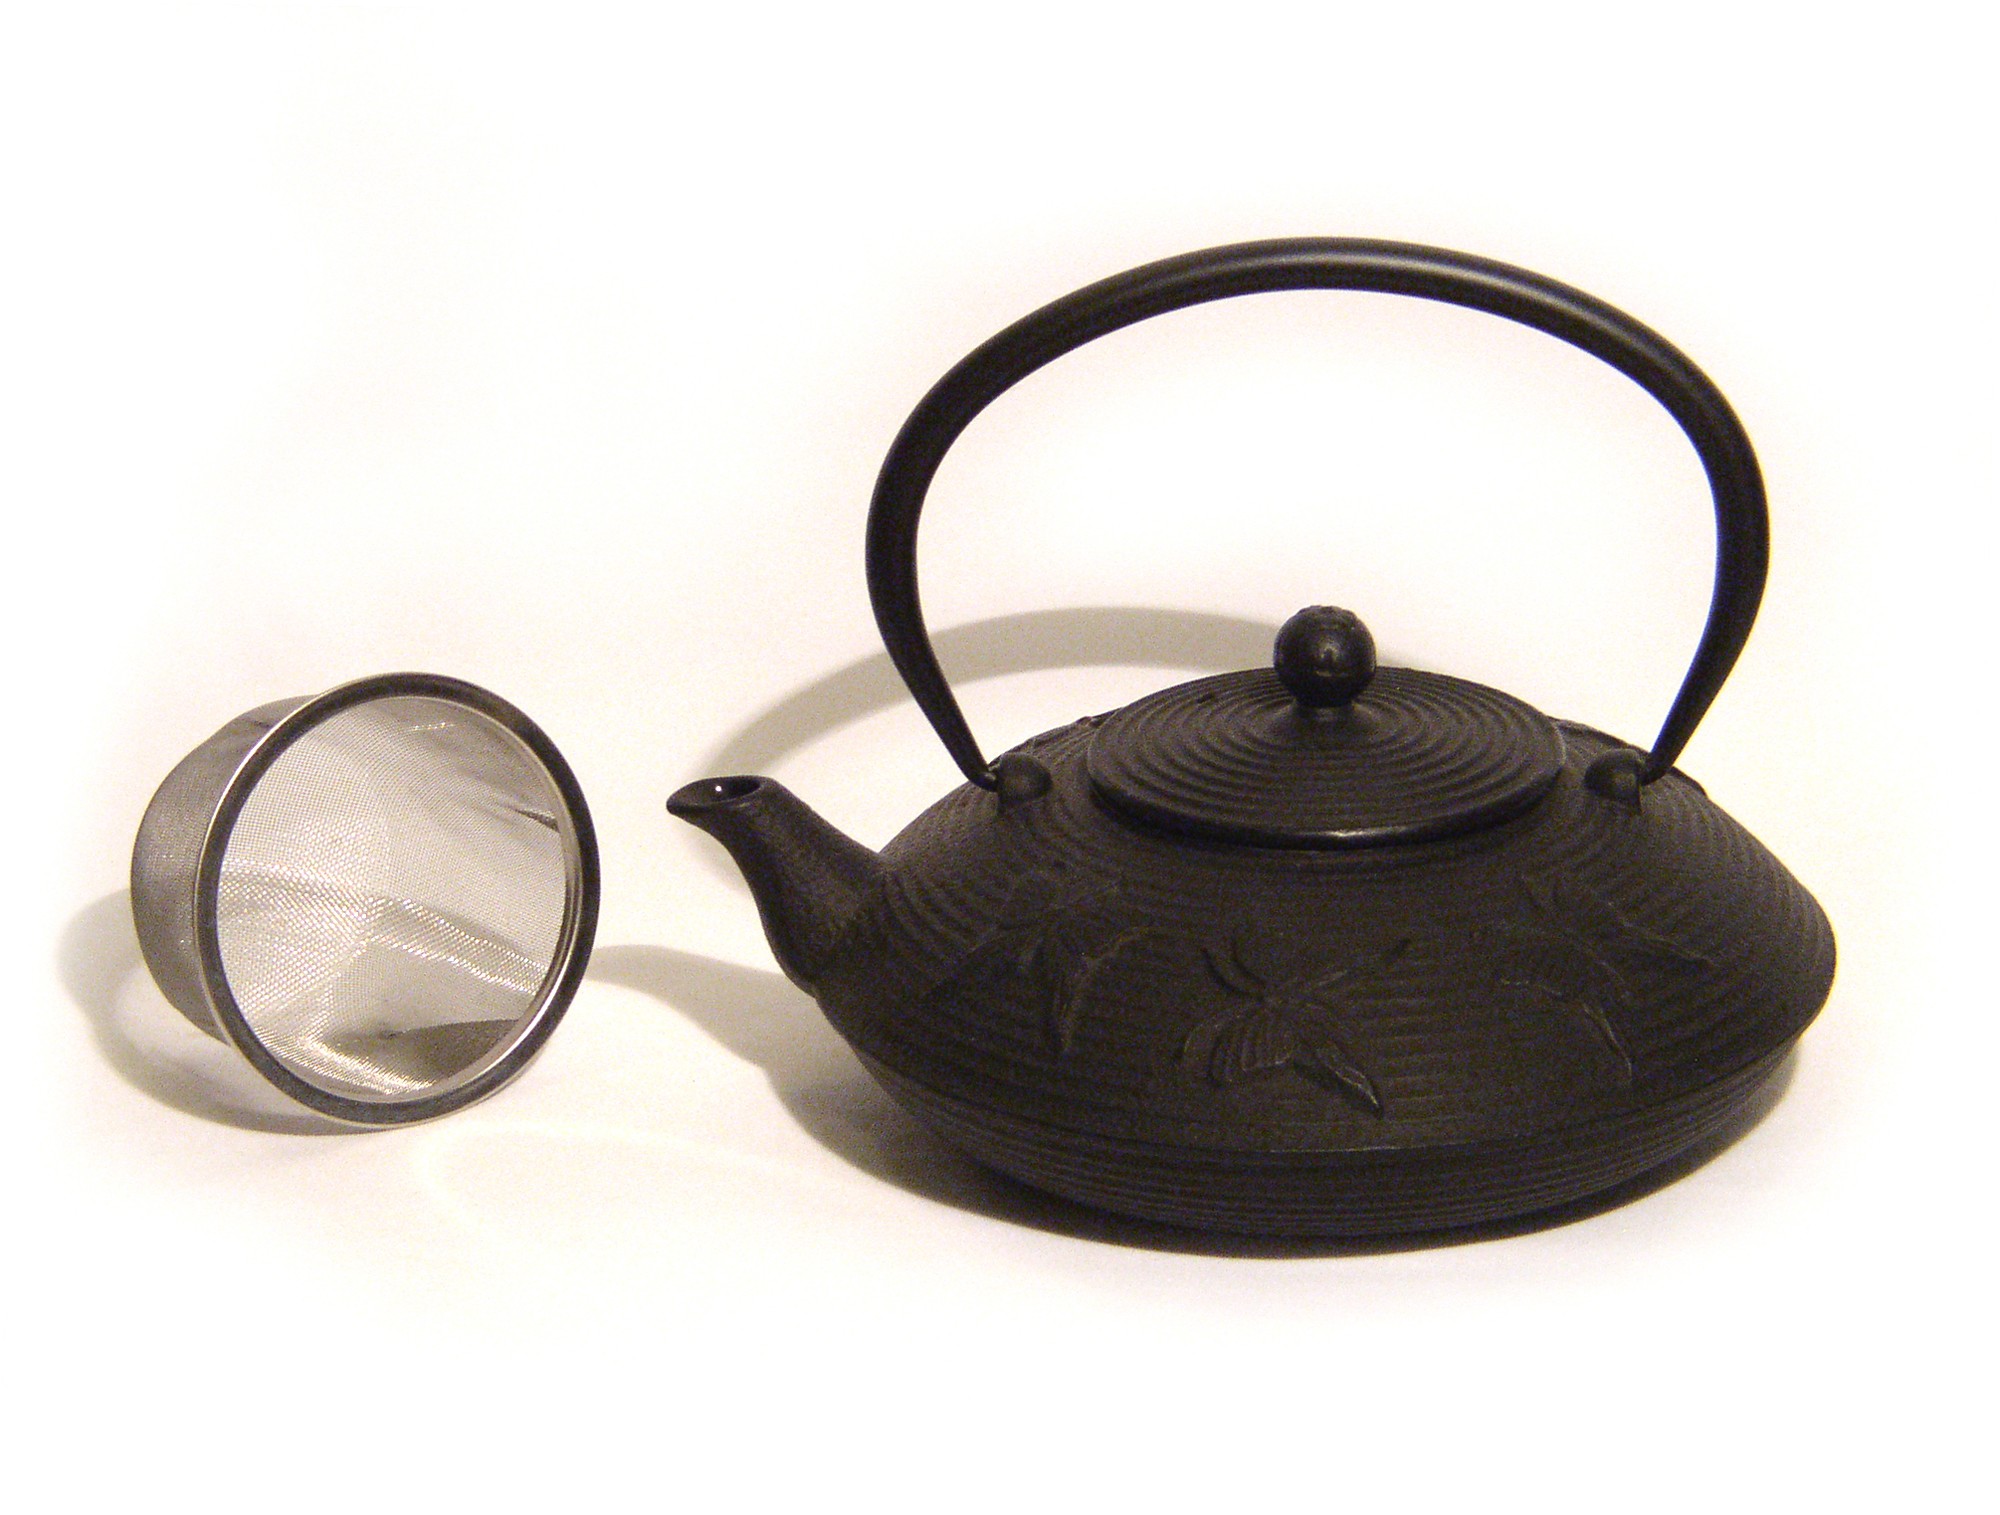 Cast Iron Teapot - Black